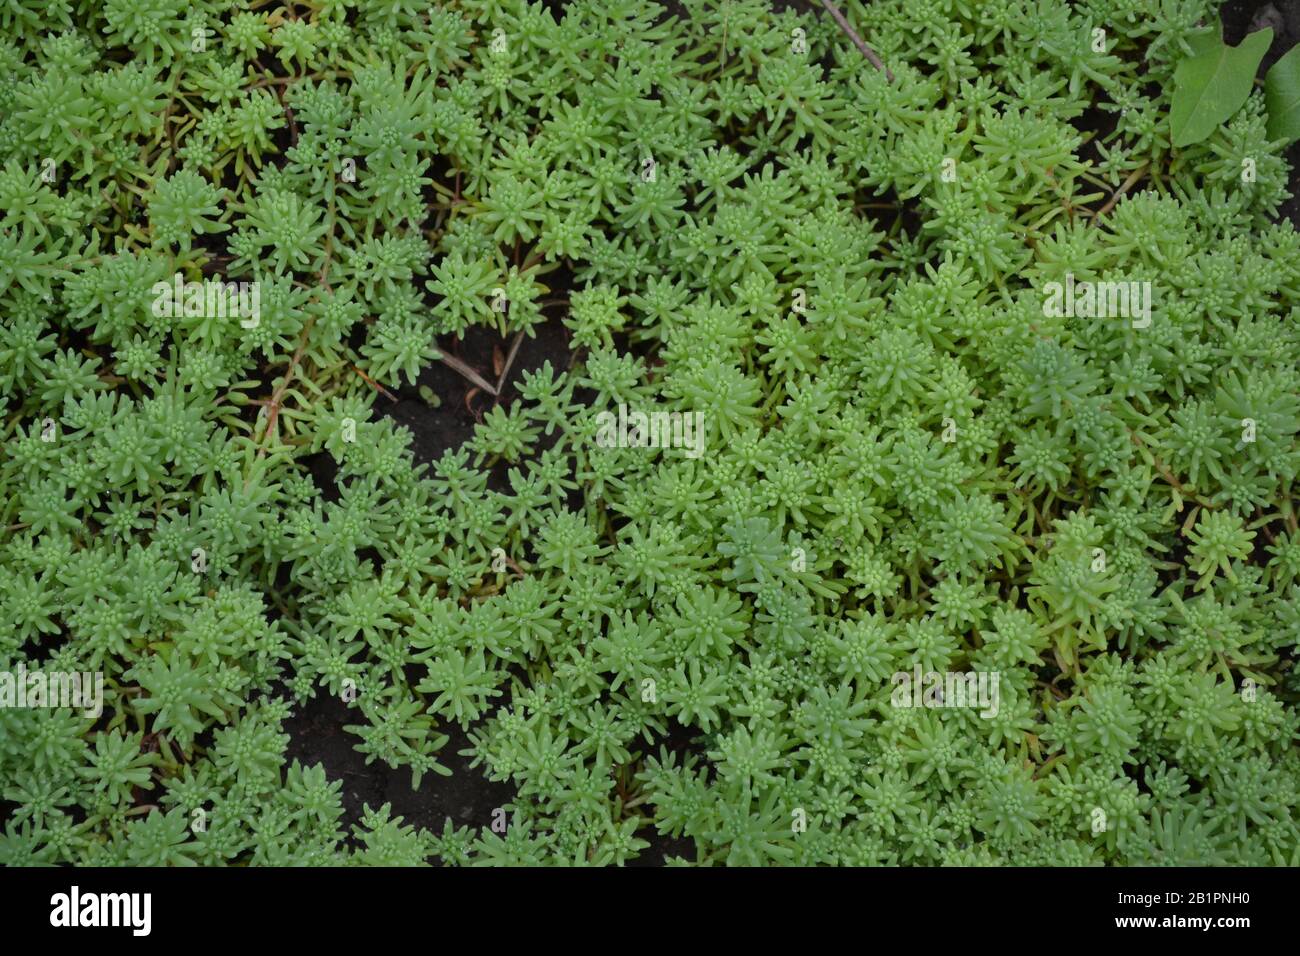 Stonecrop. Hare cabbage. Sedum. Green moss. Decorative grassy carpet. Green flower bed decoration. Garden. Green background. Horizontal Stock Photo